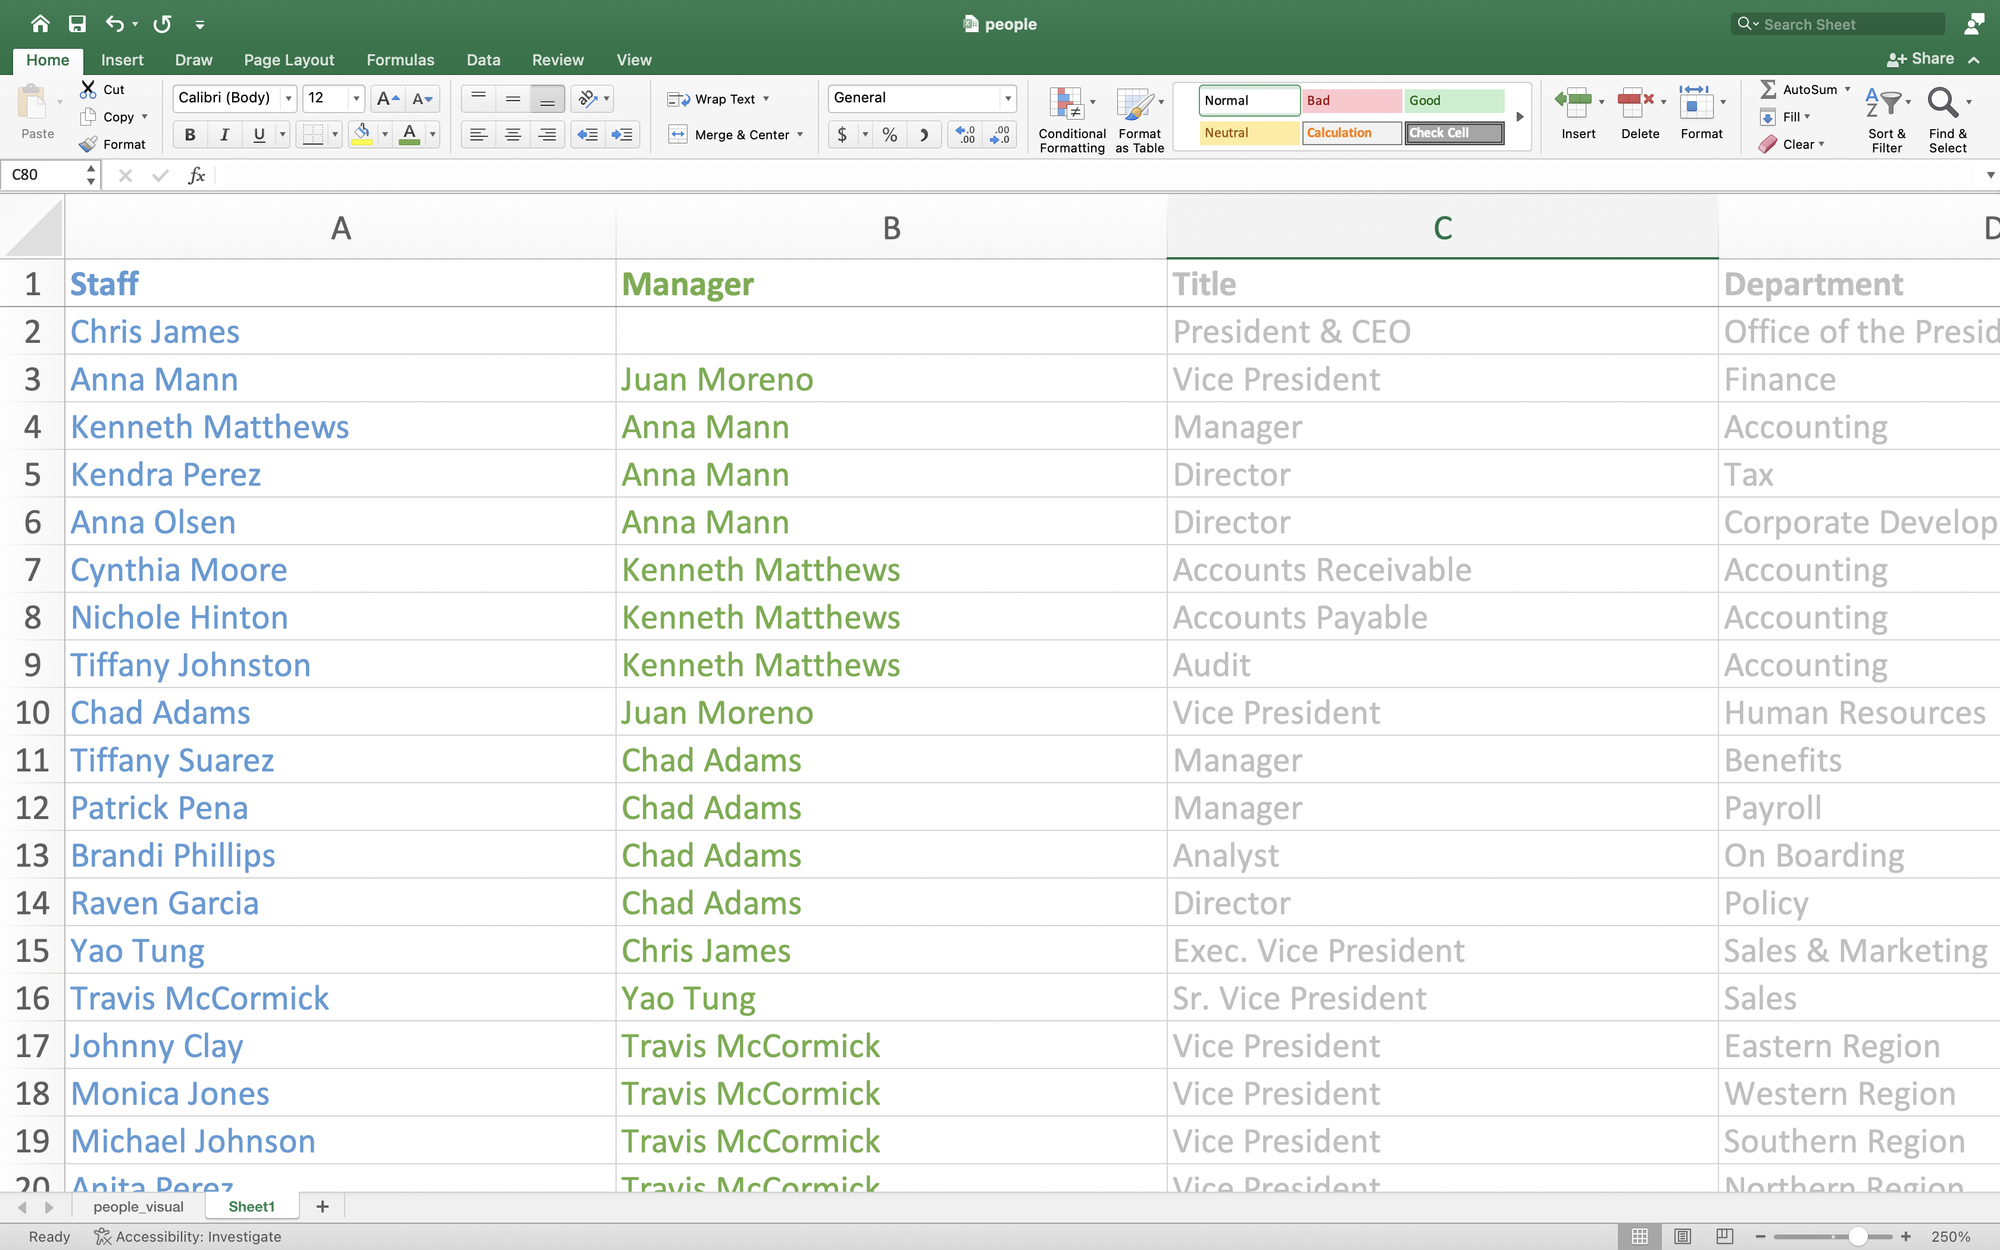 Organization Structure in Excel